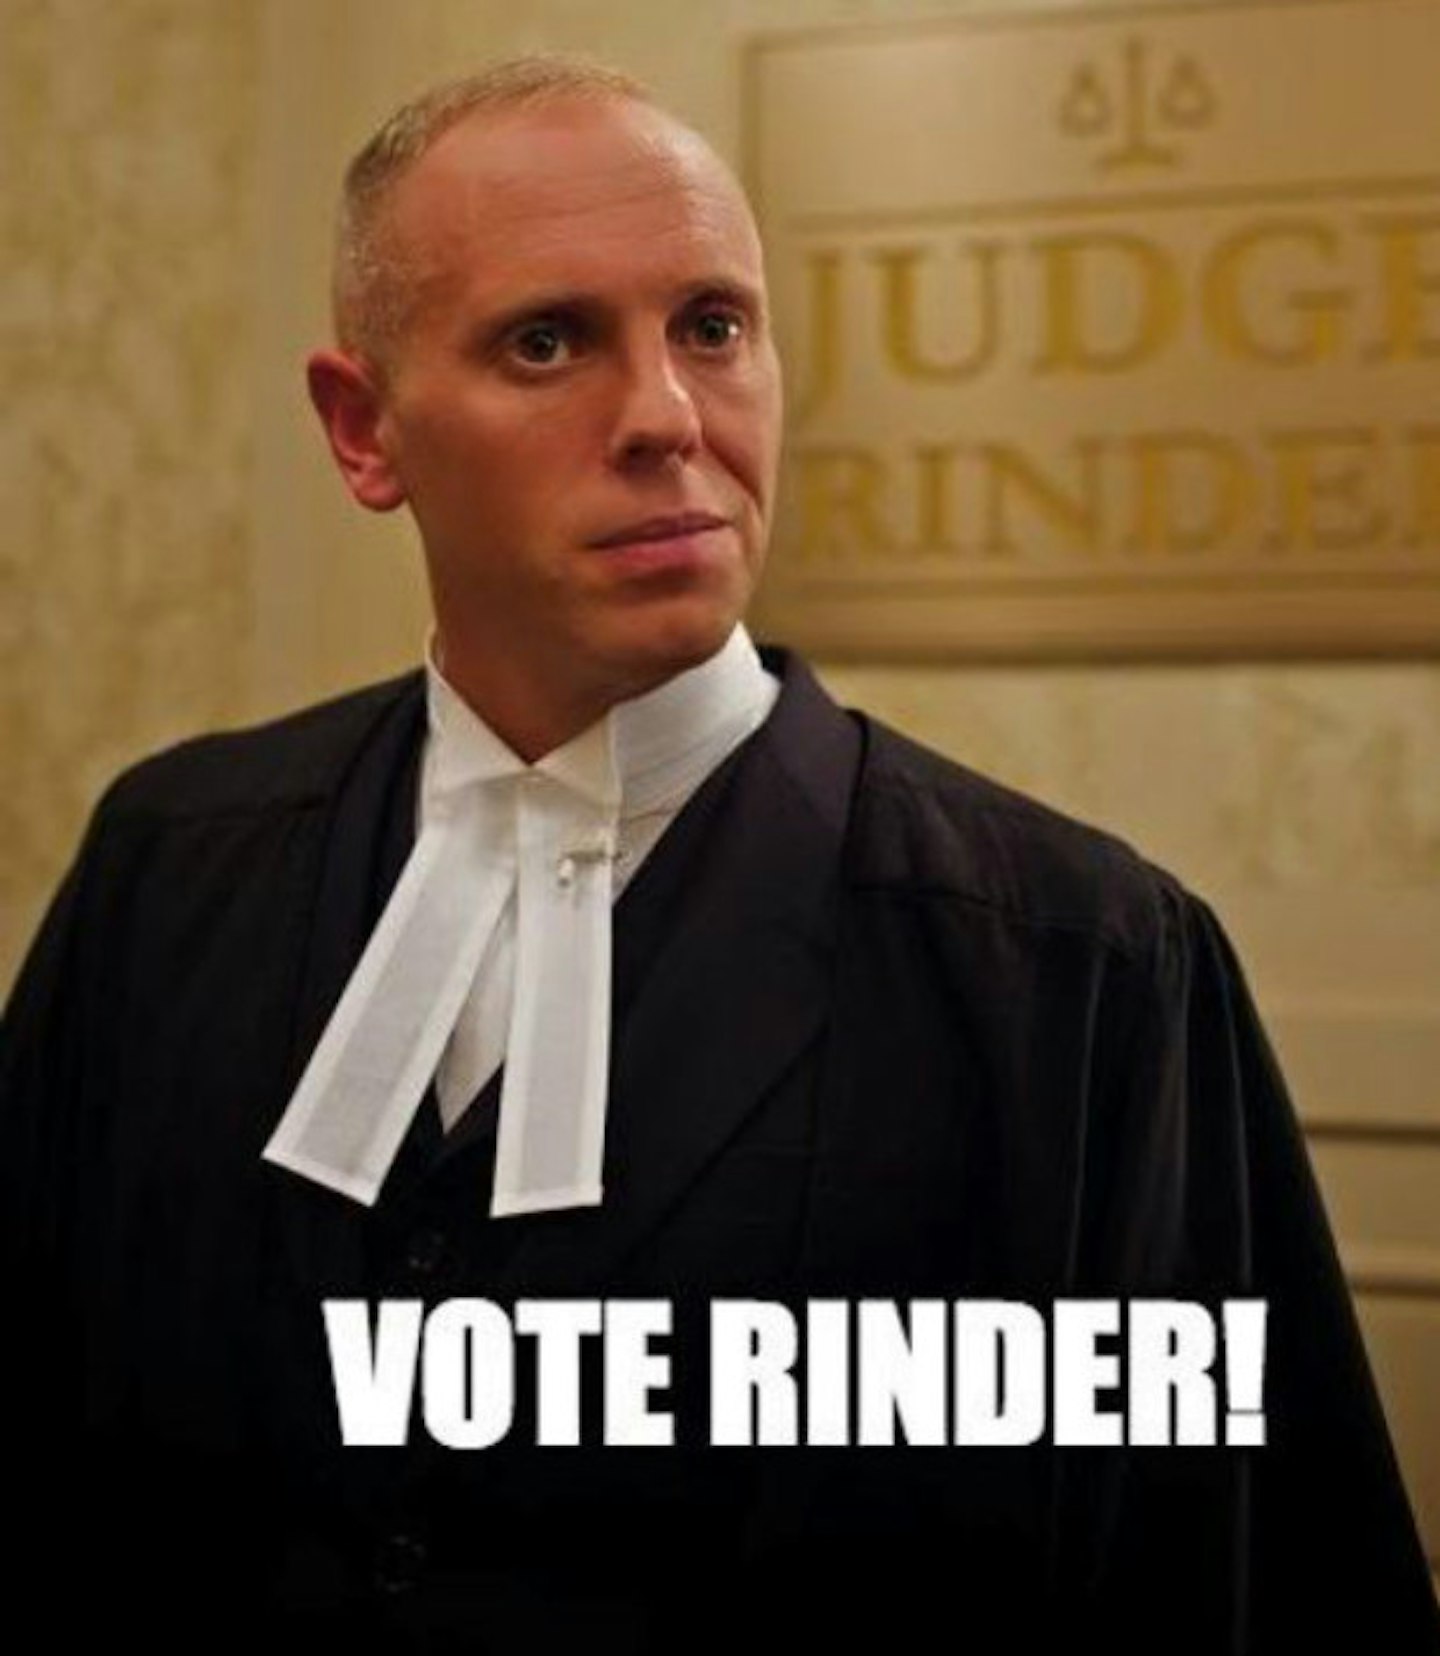 25 - Judge Rinder